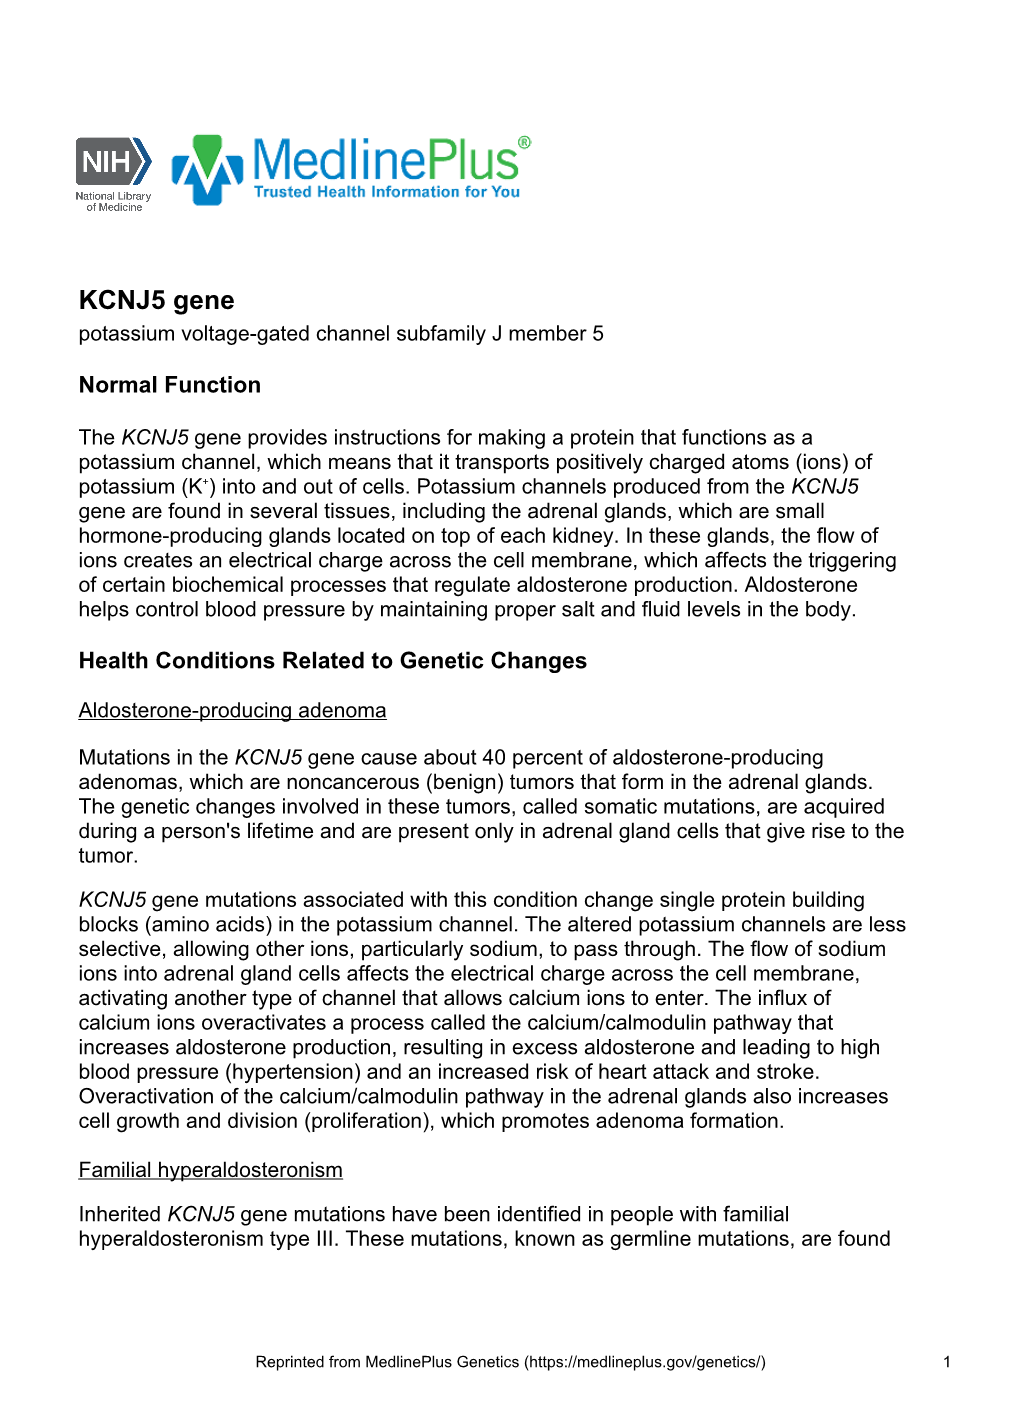 KCNJ5 Gene Potassium Voltage-Gated Channel Subfamily J Member 5